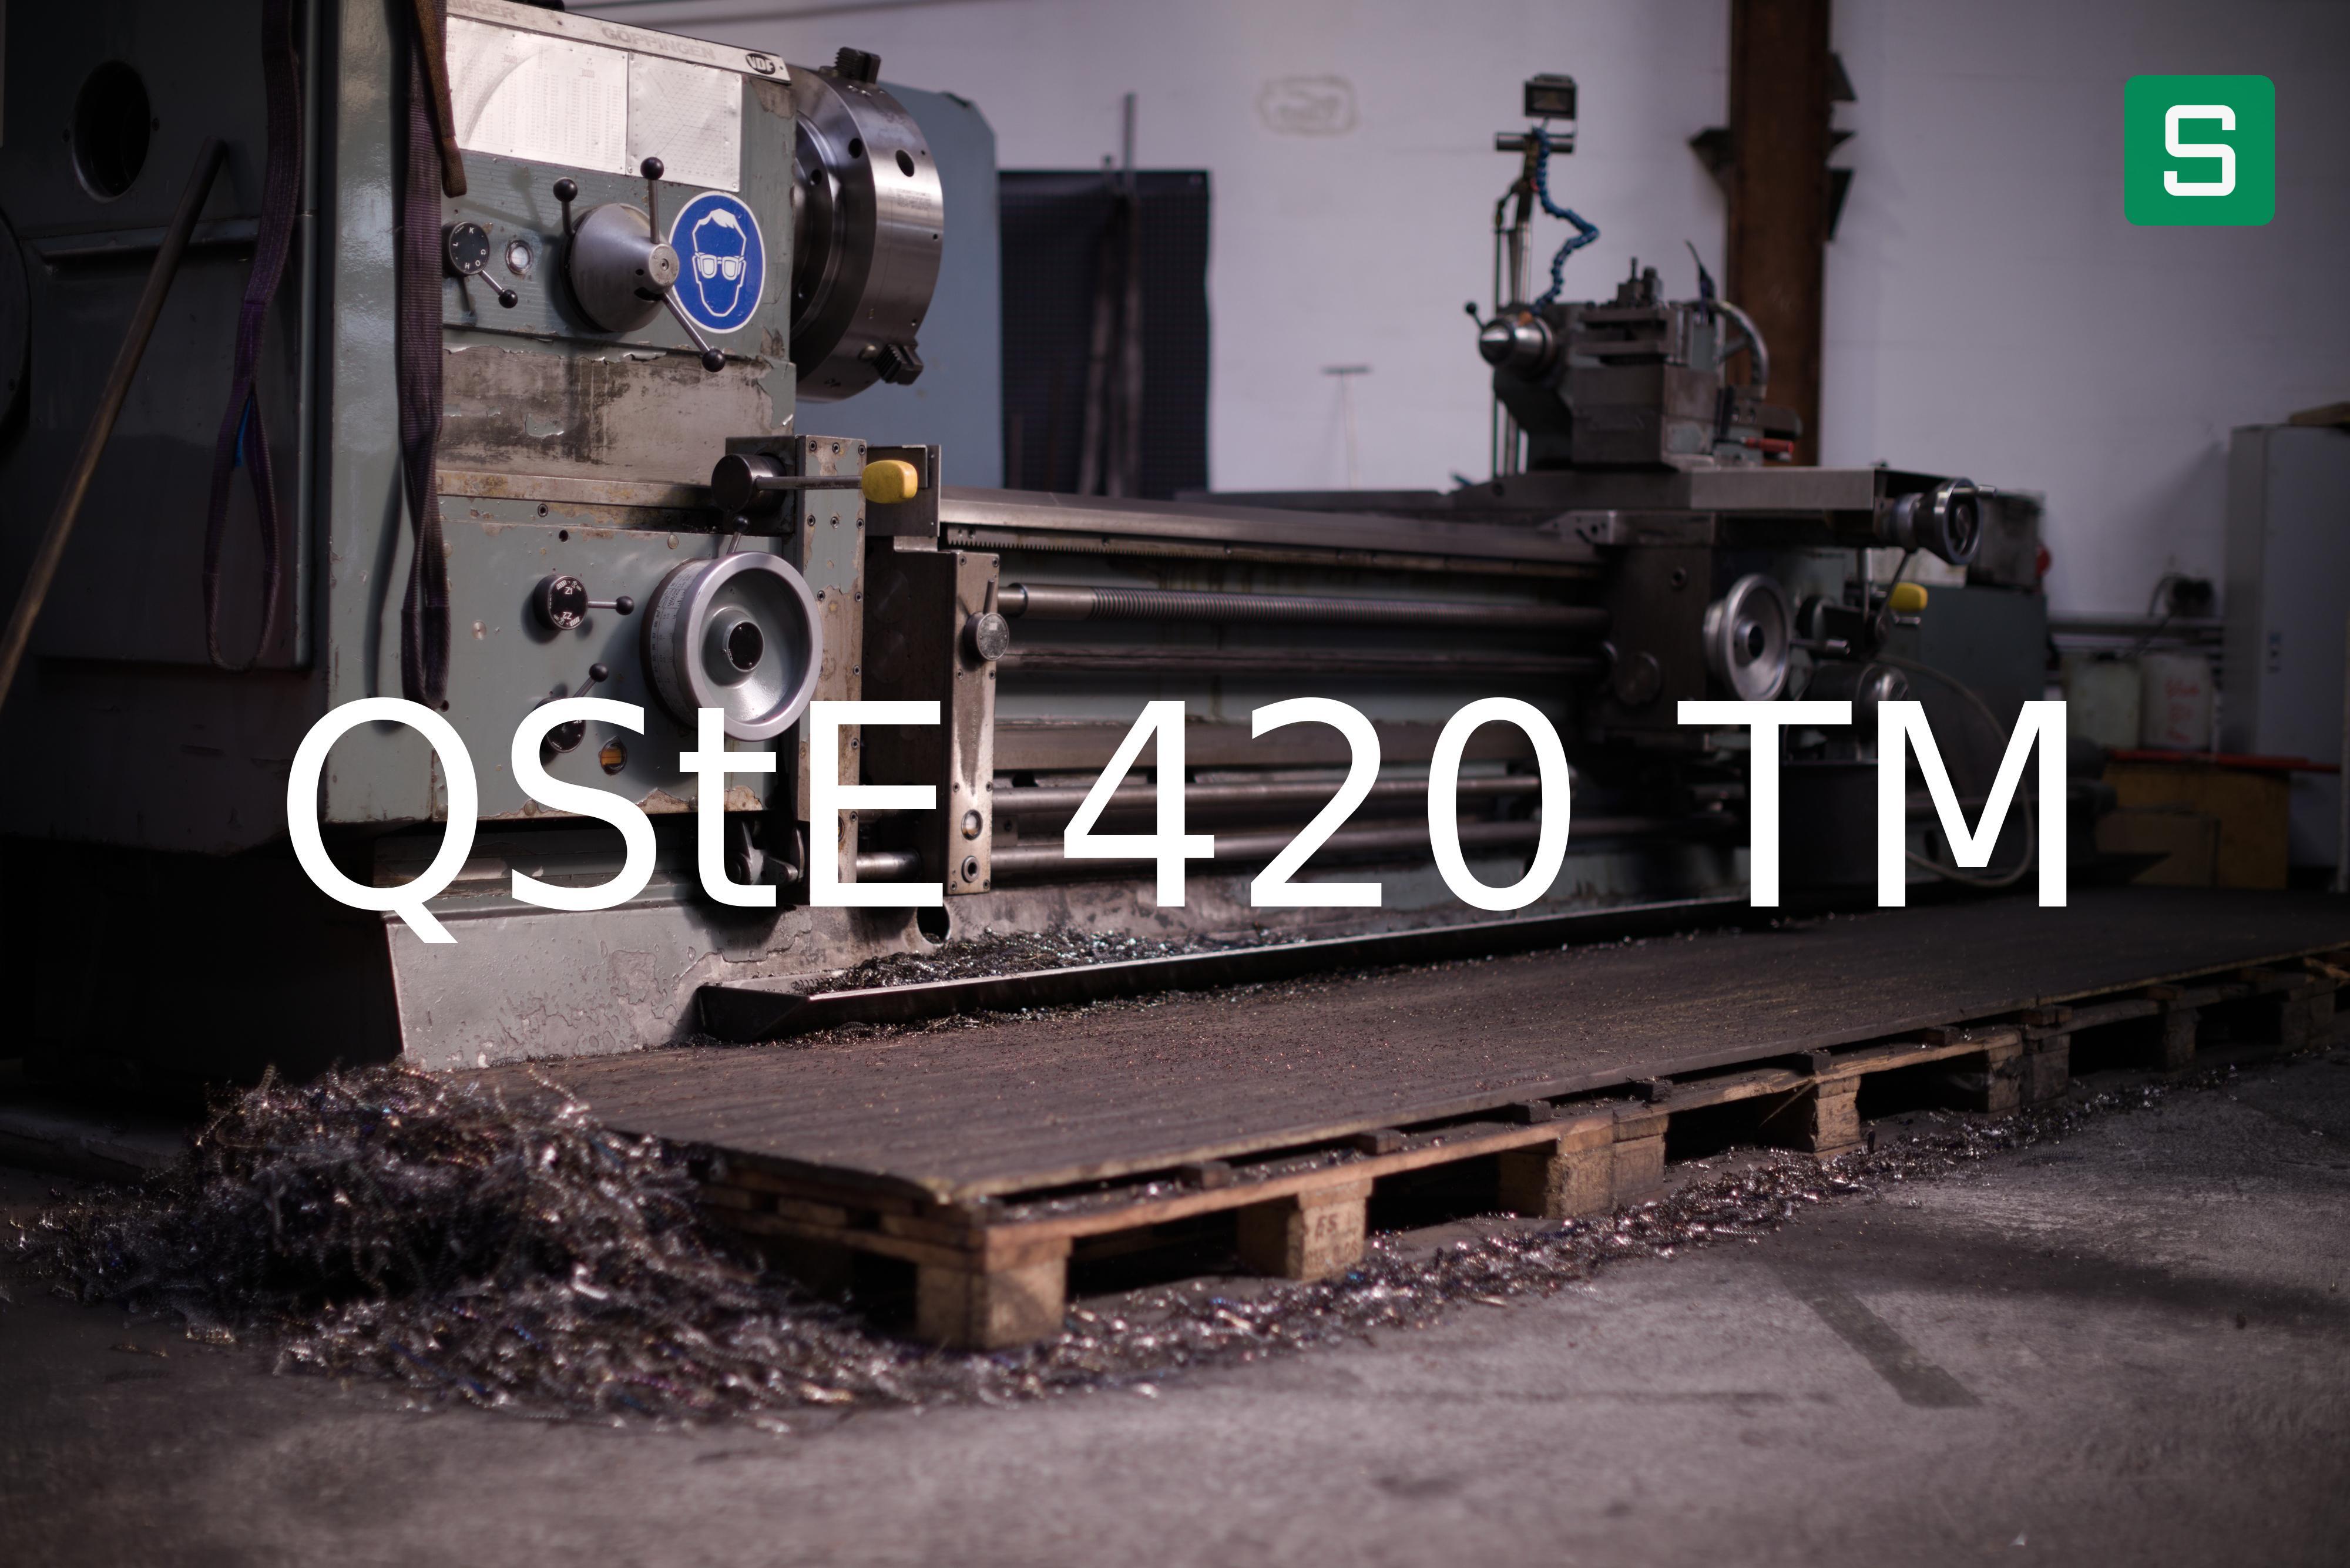 Steel Material: QStE 420 TM